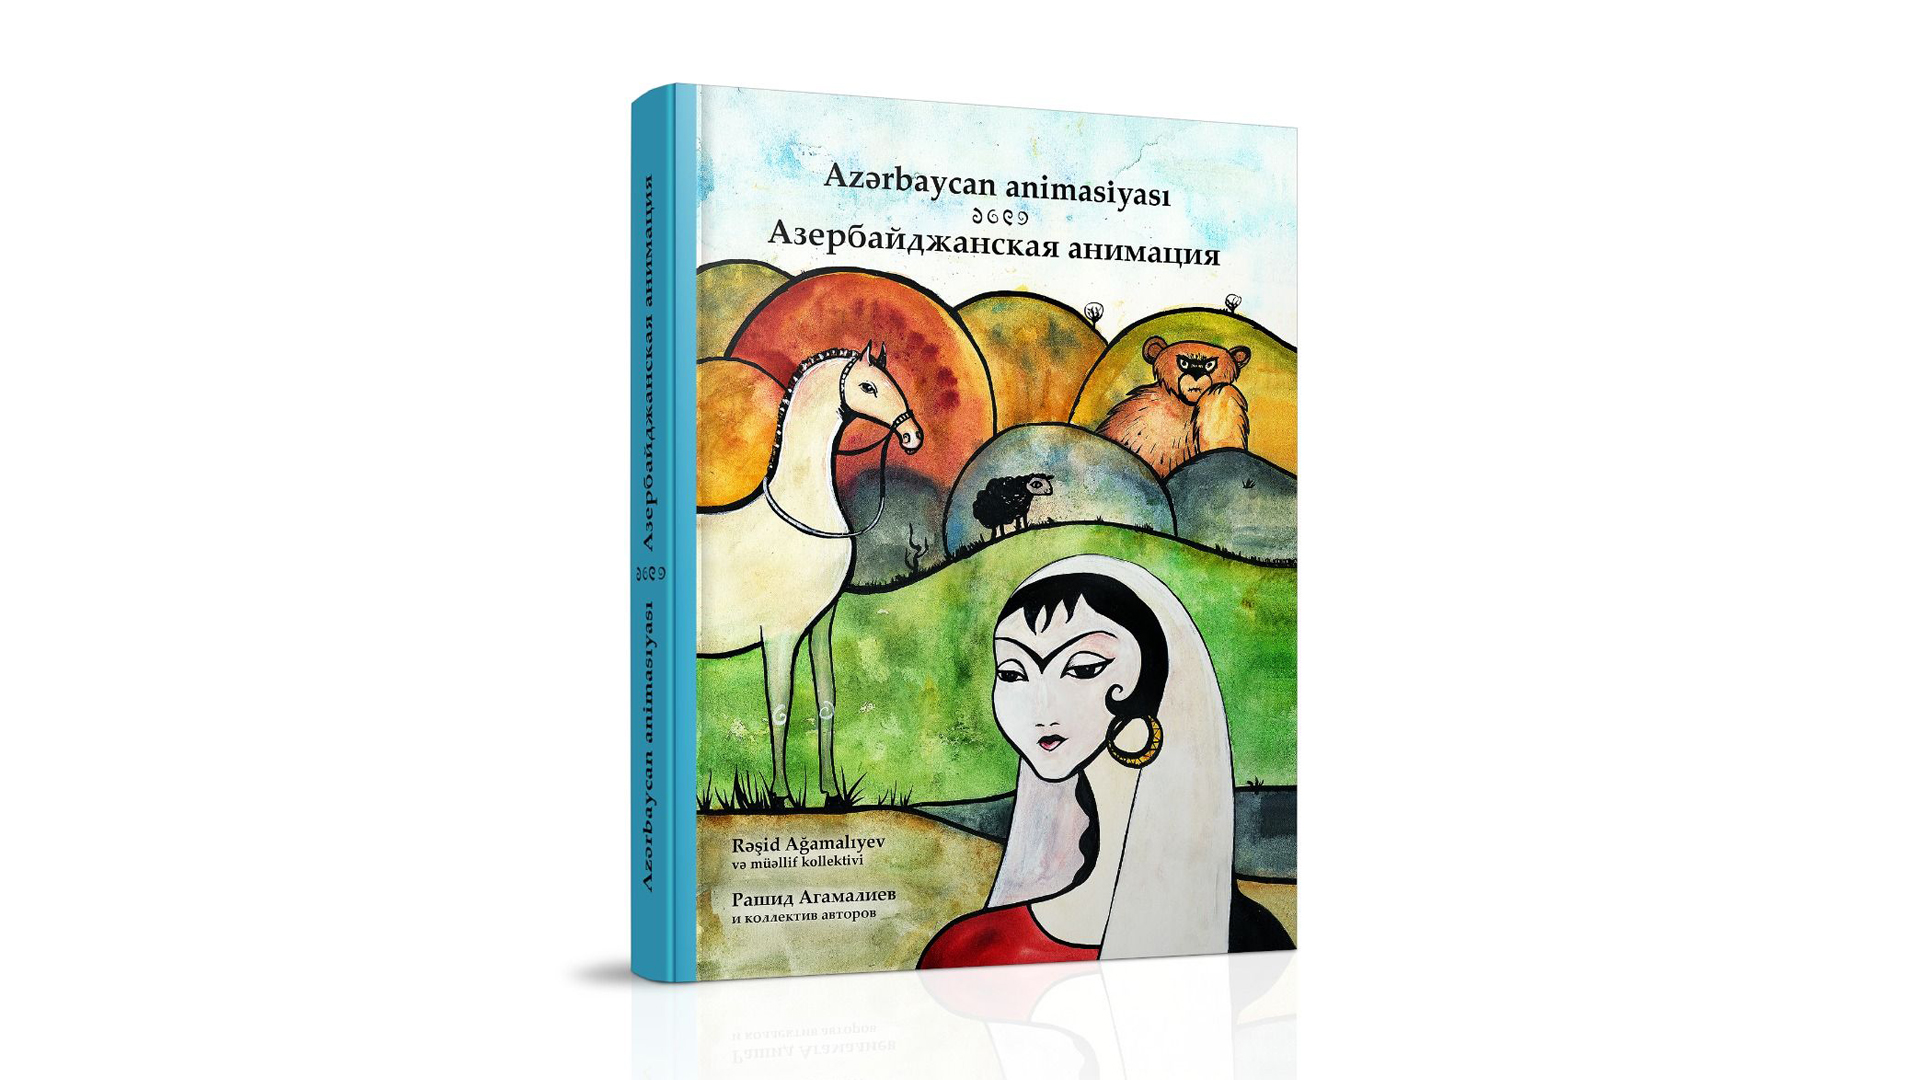 Azerbaijan Animation Book –